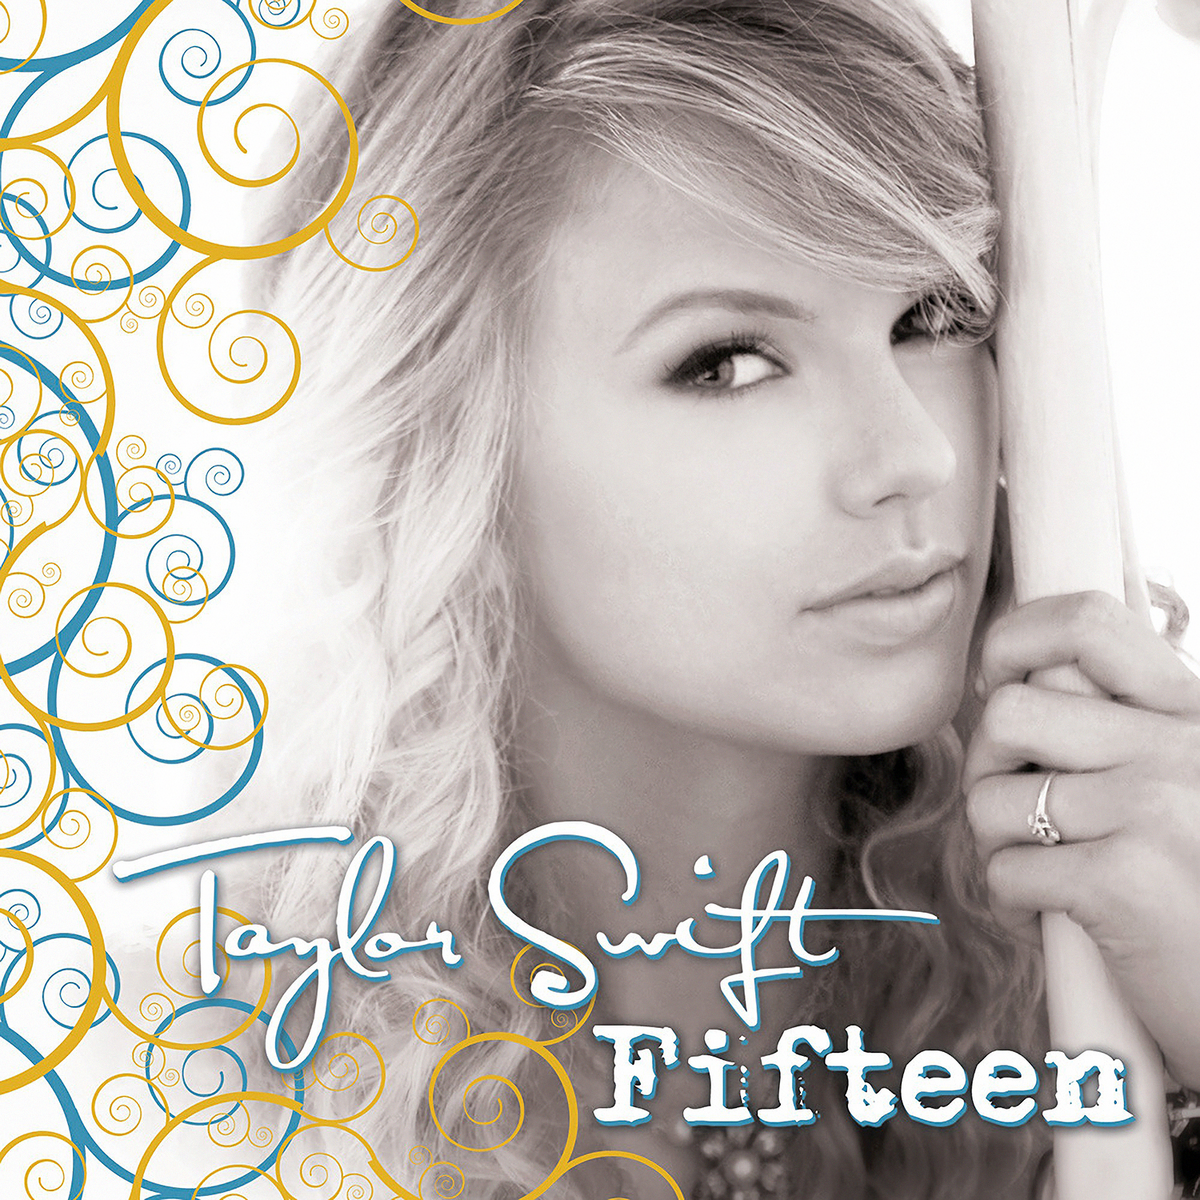 Vanity Fair, Taylor Swift Wiki